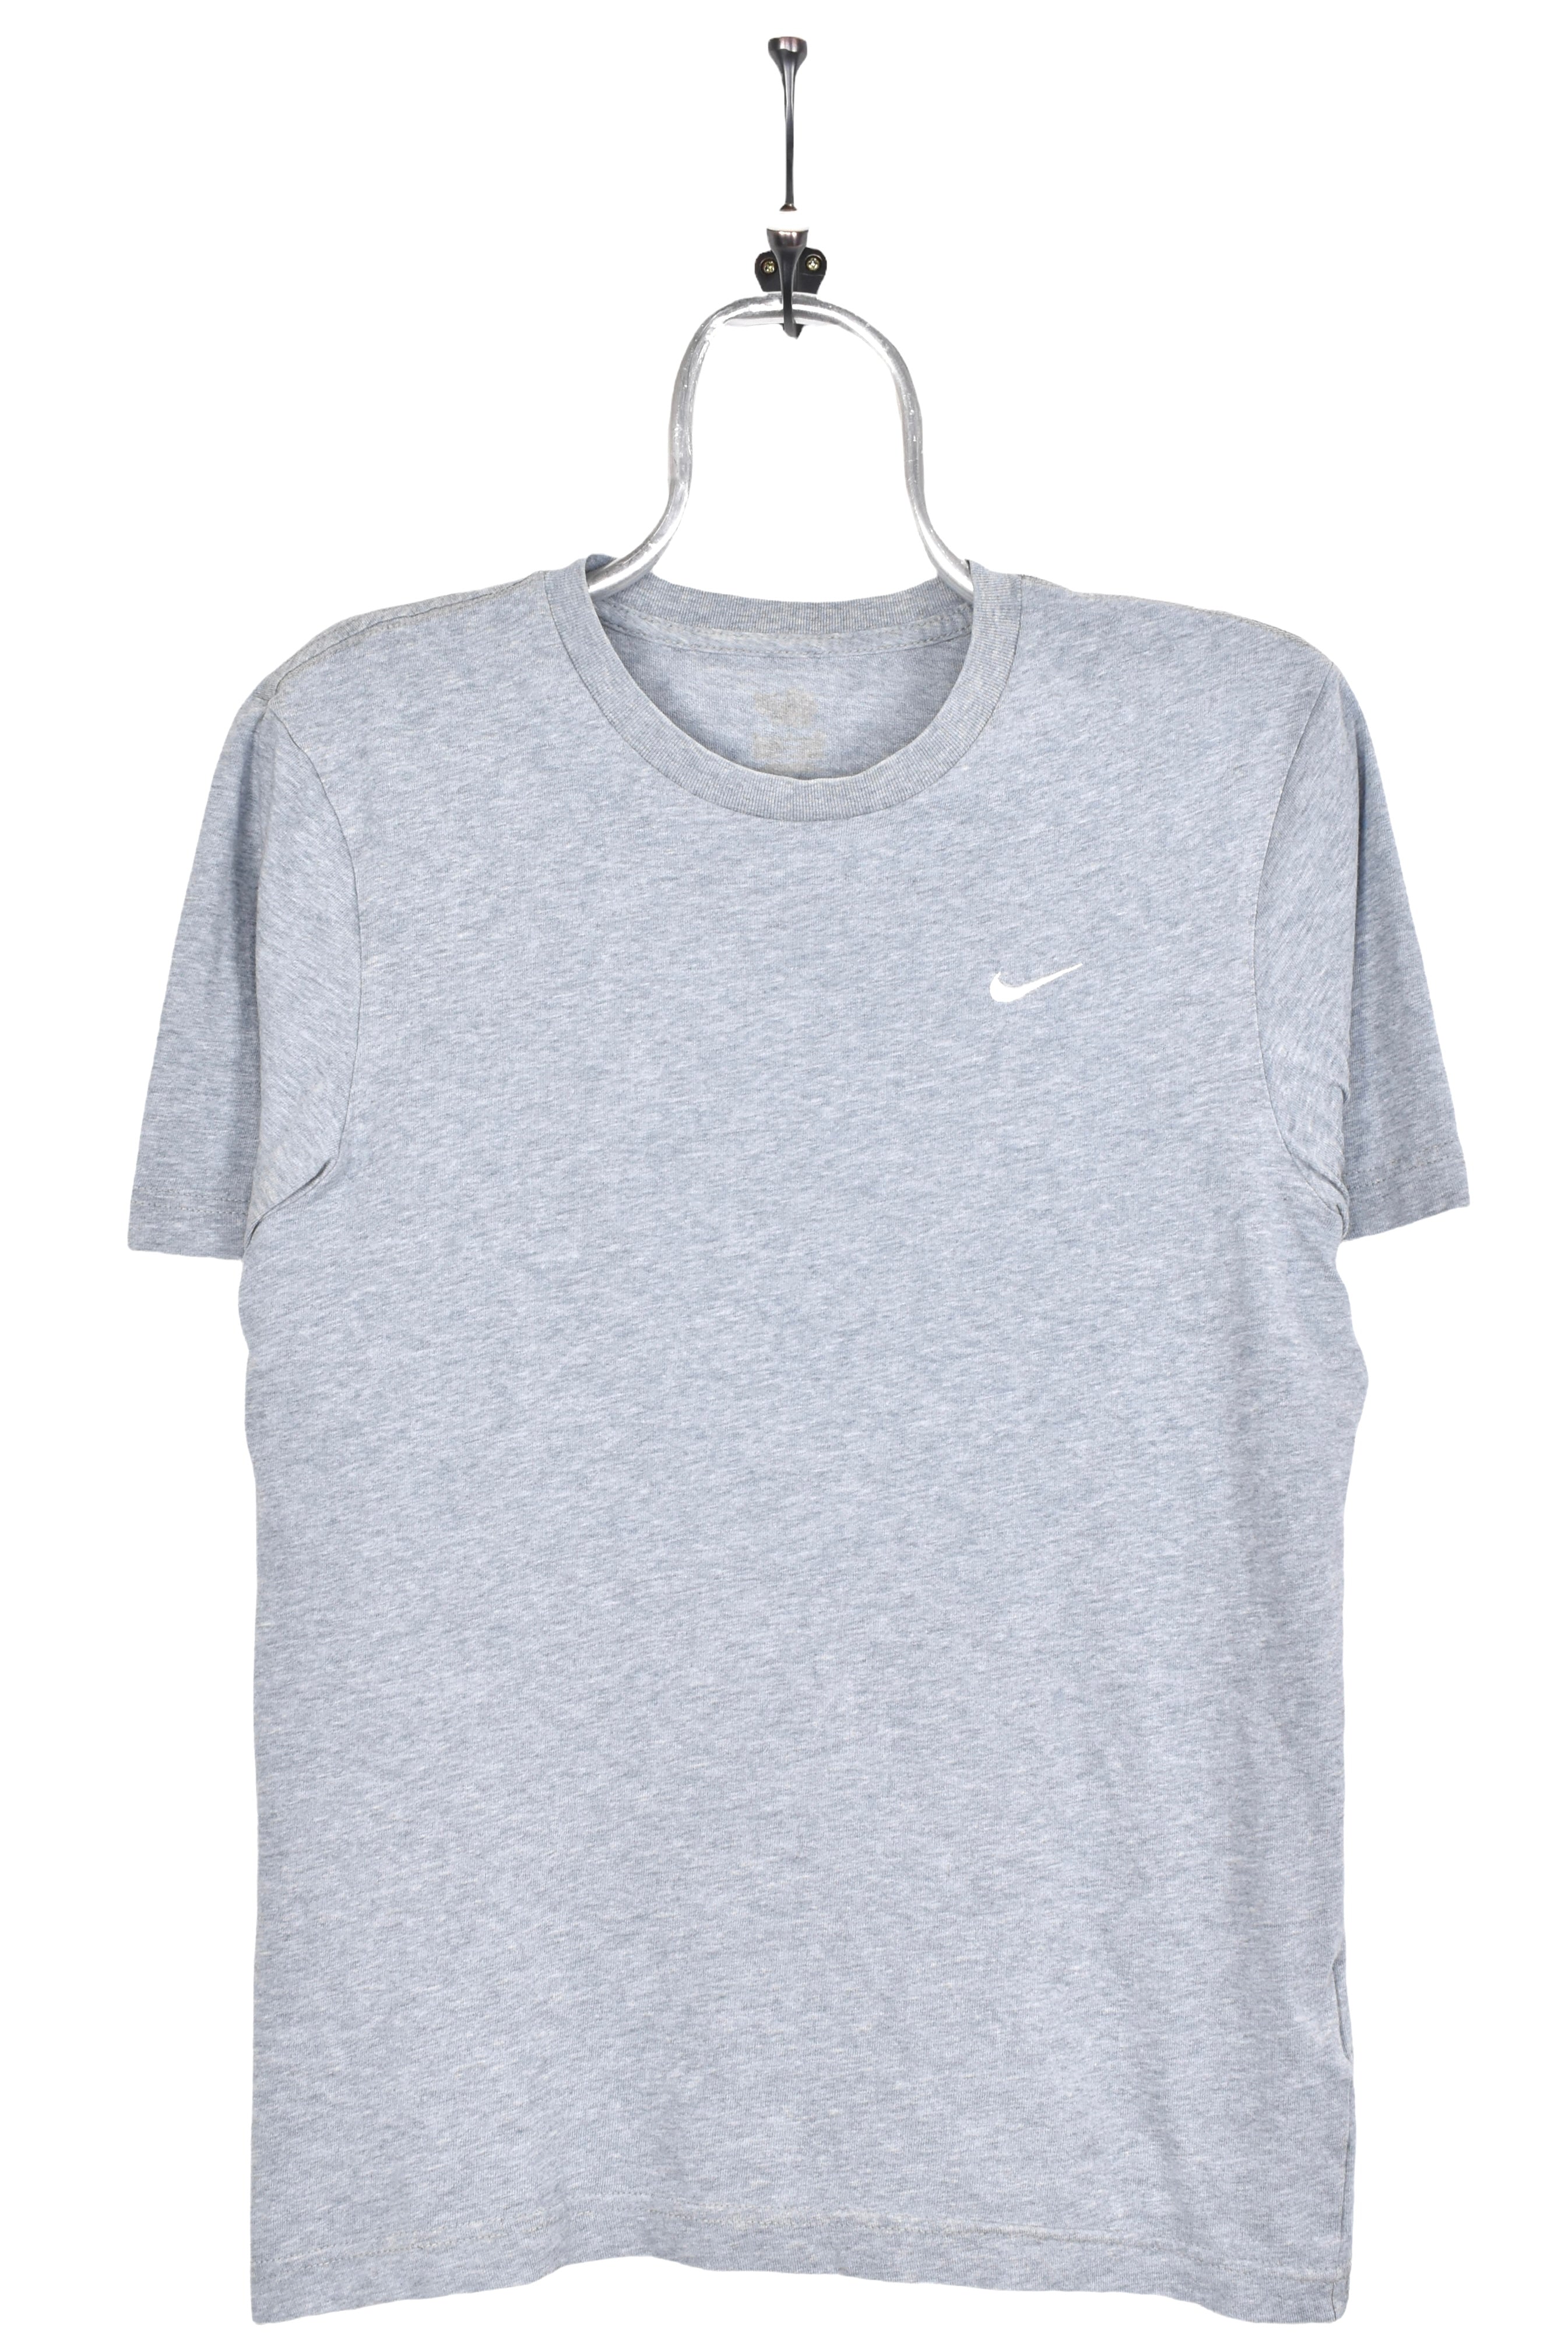 Women's vintage Nike shirt, grey embroidered tee - AU Medium NIKE